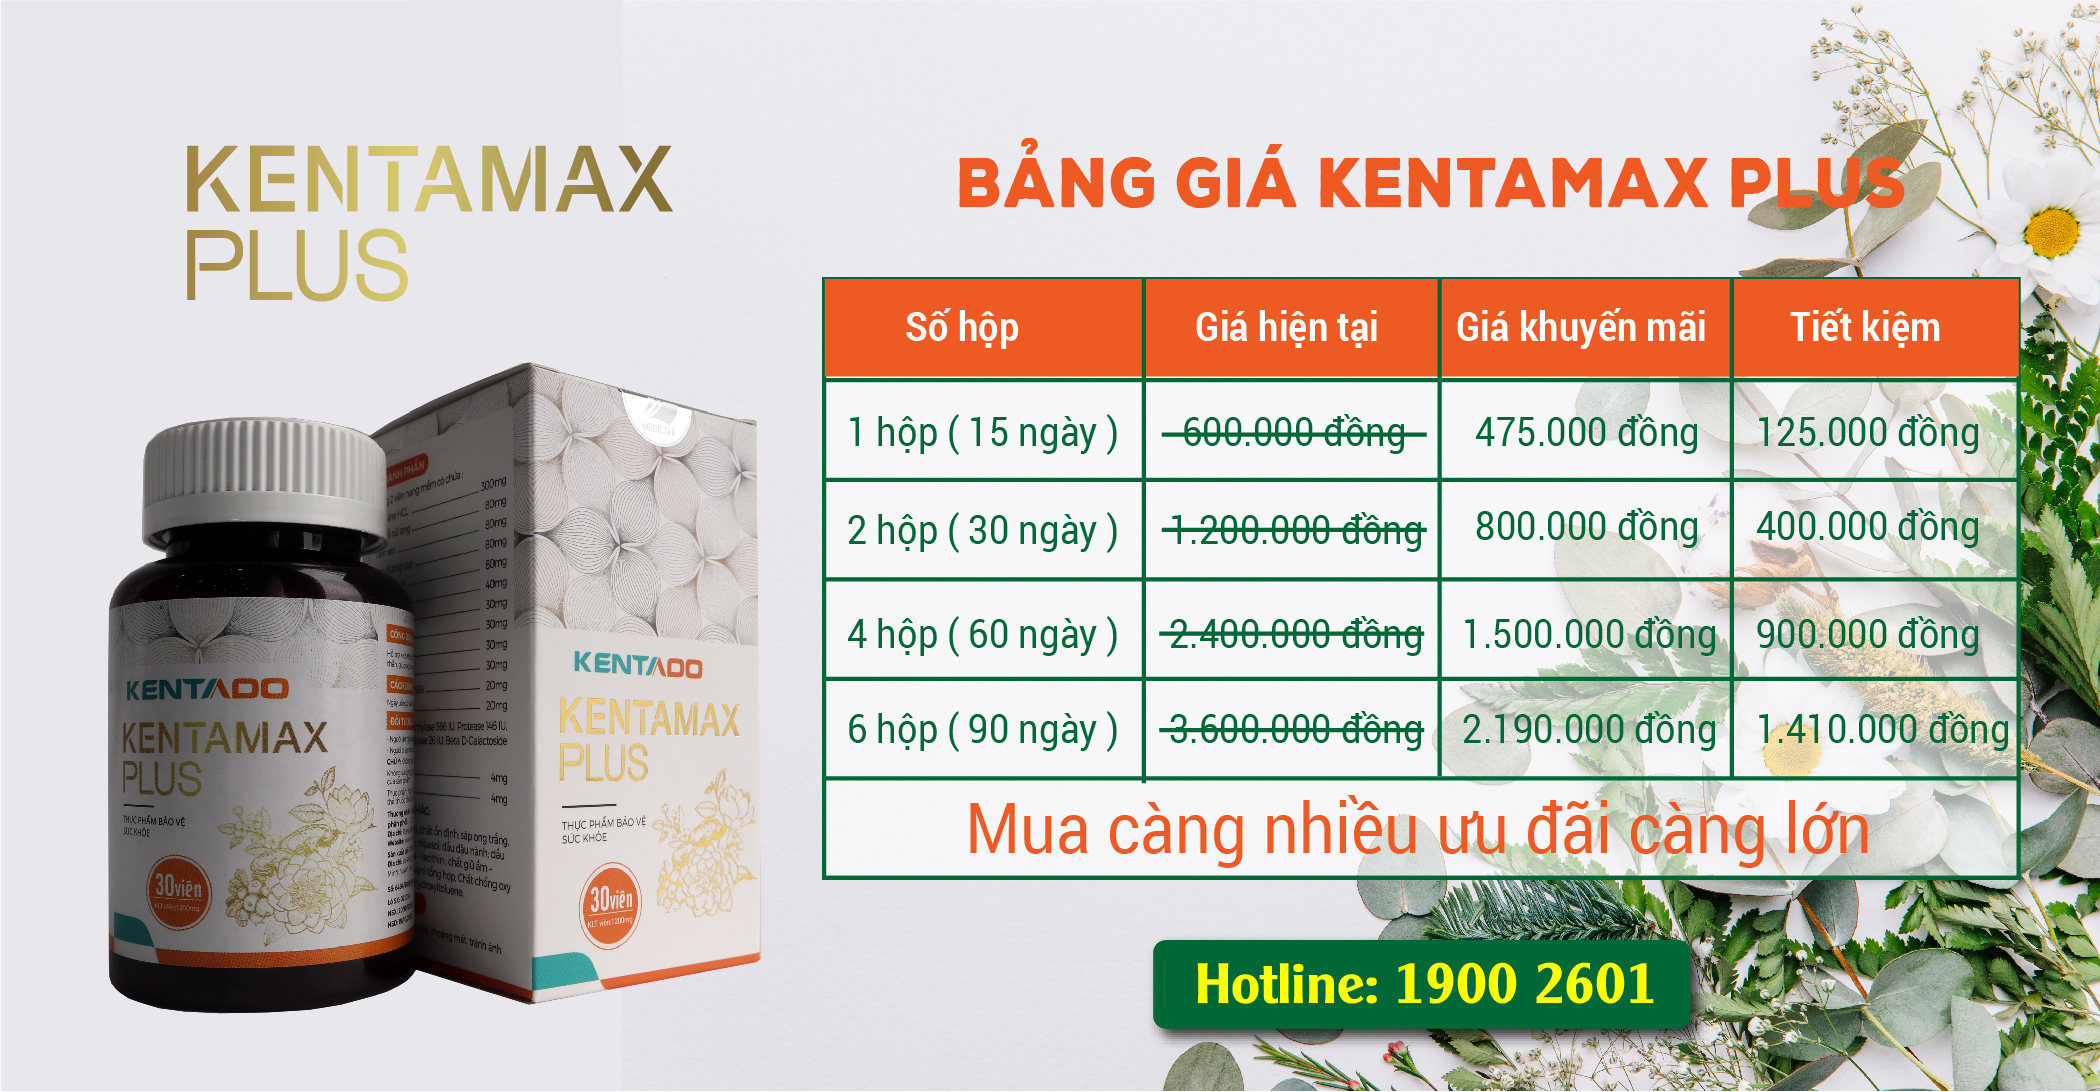 Bảng giá sản phẩm Kentamax Plus